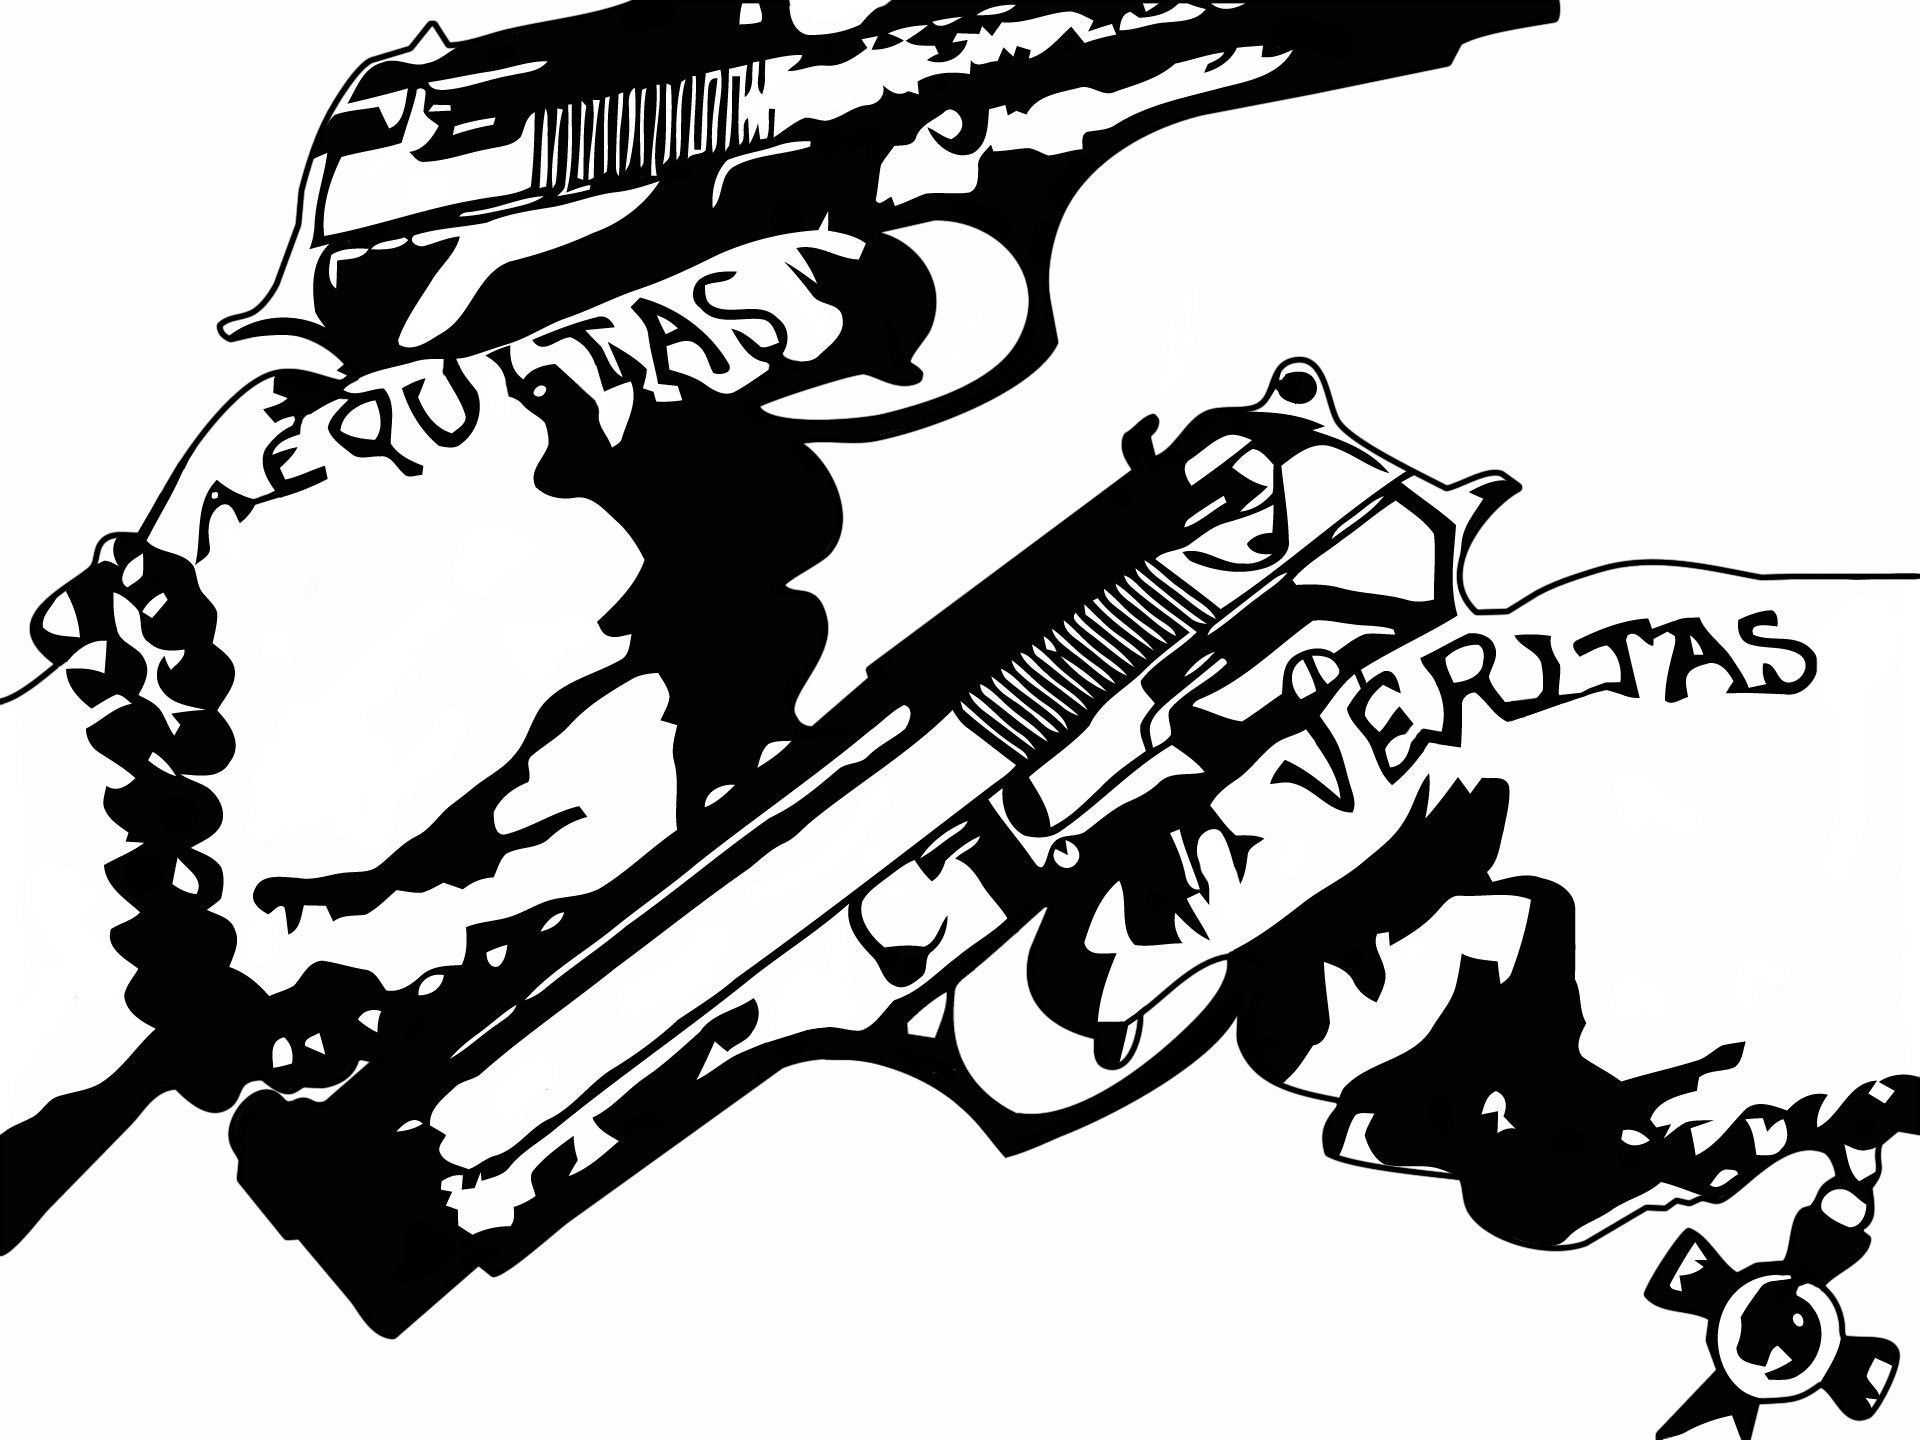 BOONDOCK SAINTS action crime thriller weapon gun pistol wallpaper |  | 499651 | WallpaperUP